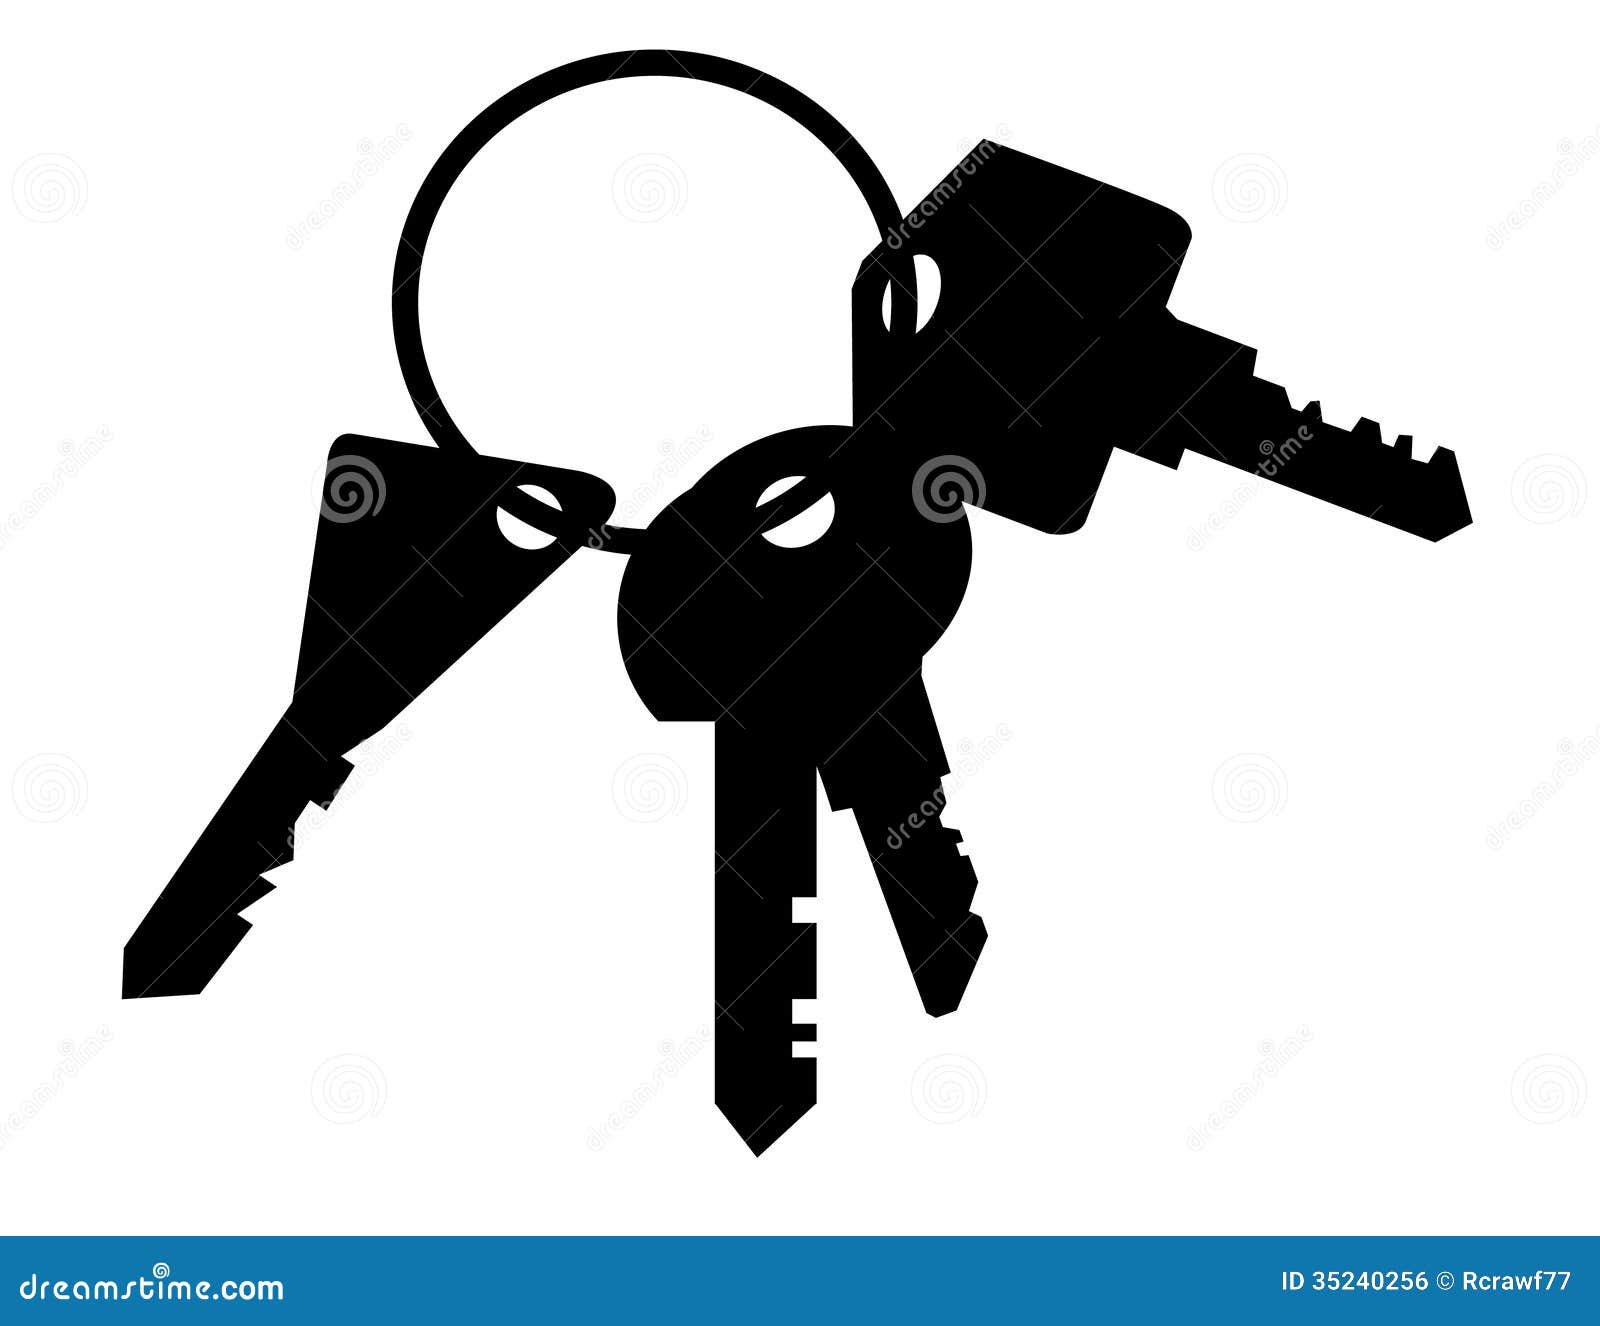 set of keys clipart - photo #41